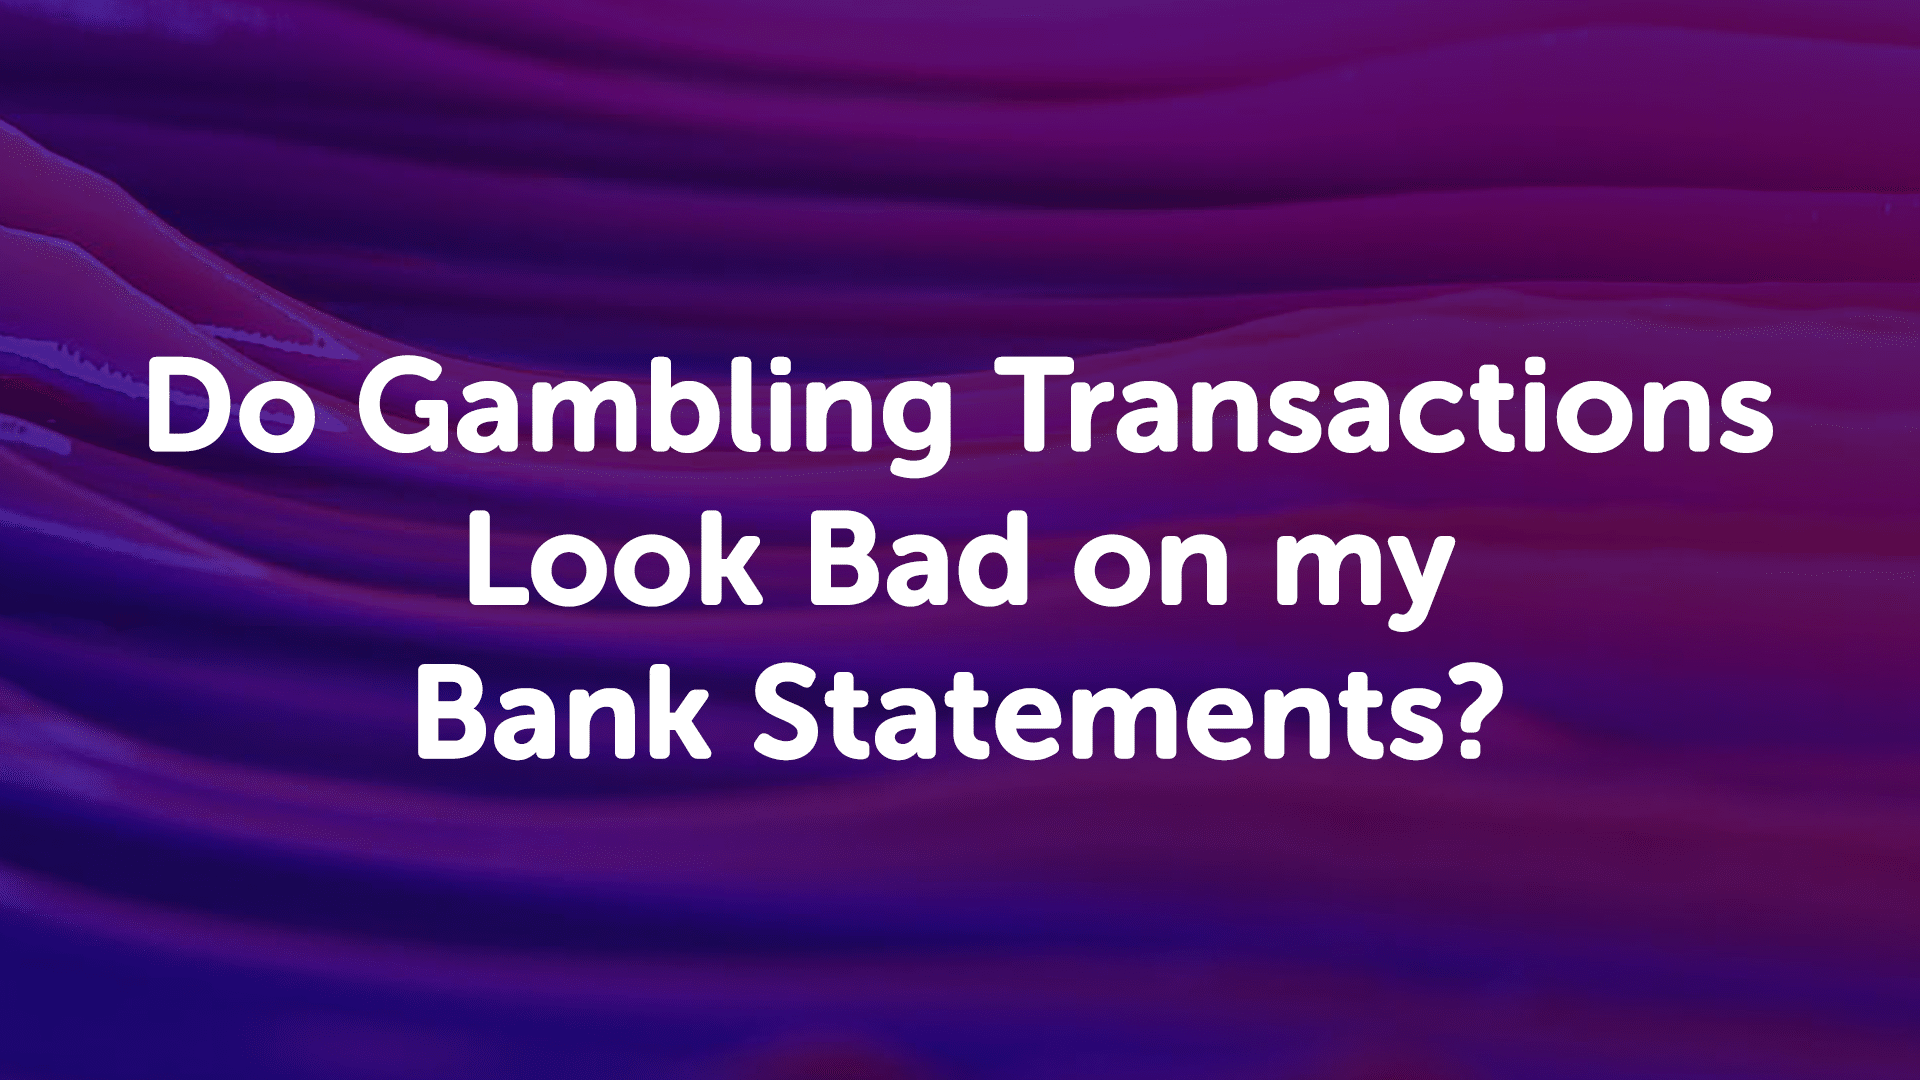 Gambling Transactions on my Bank Statements